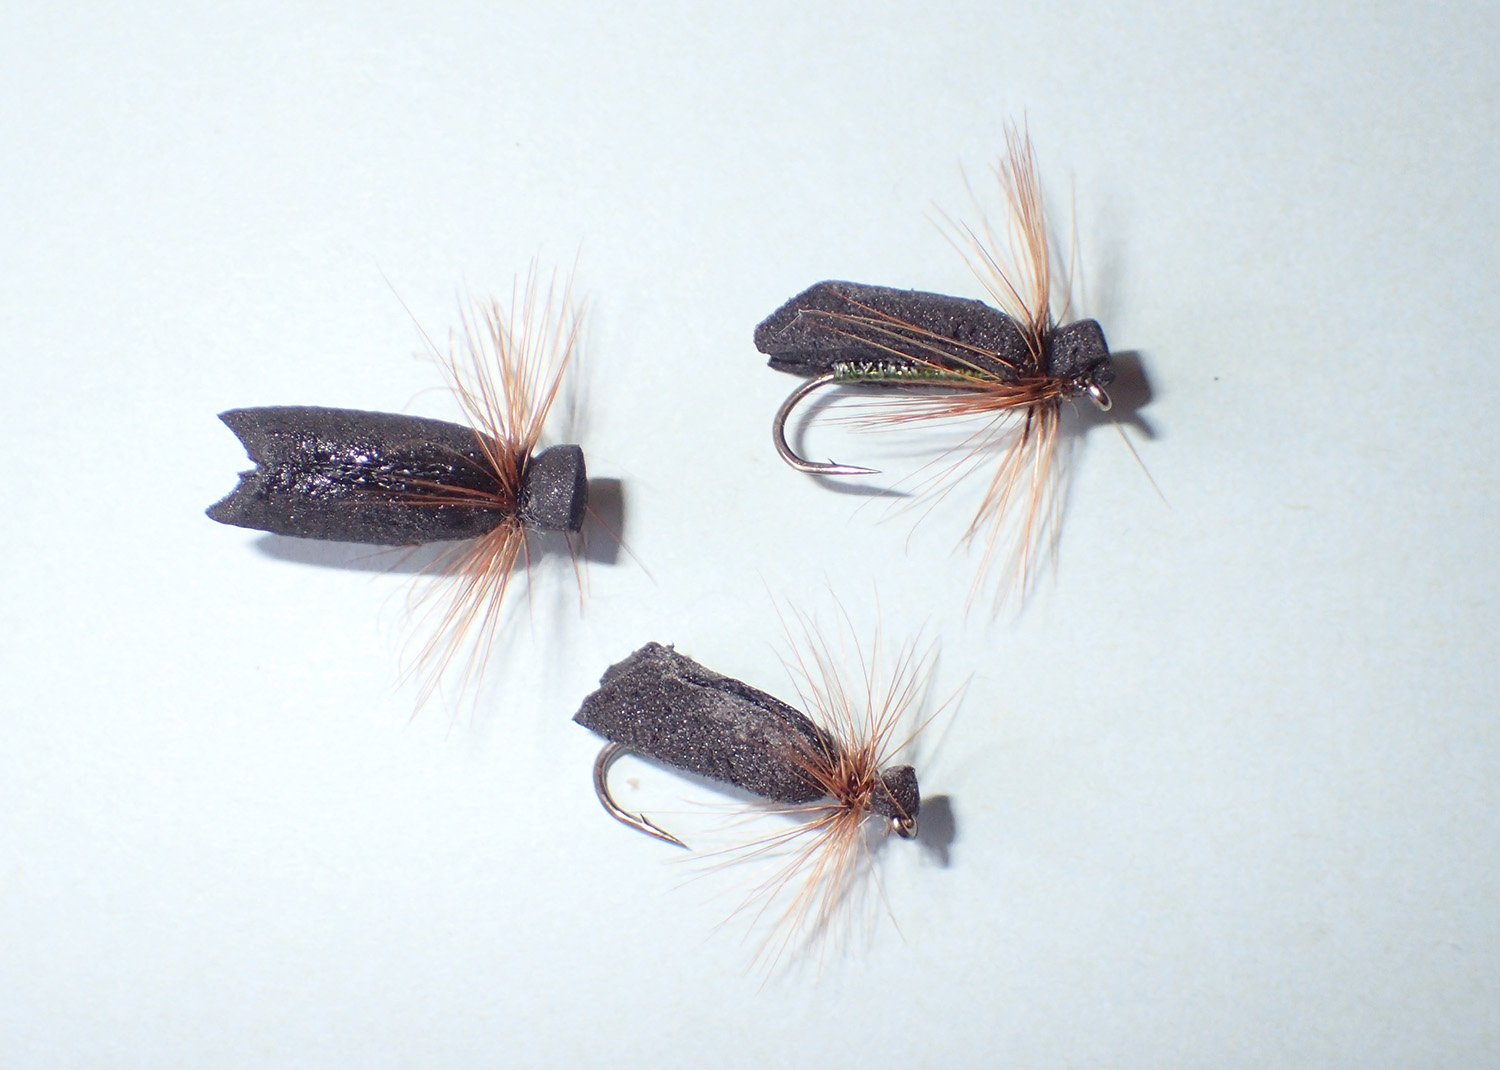 Three Scuttling Caddis dry flies on a plain background